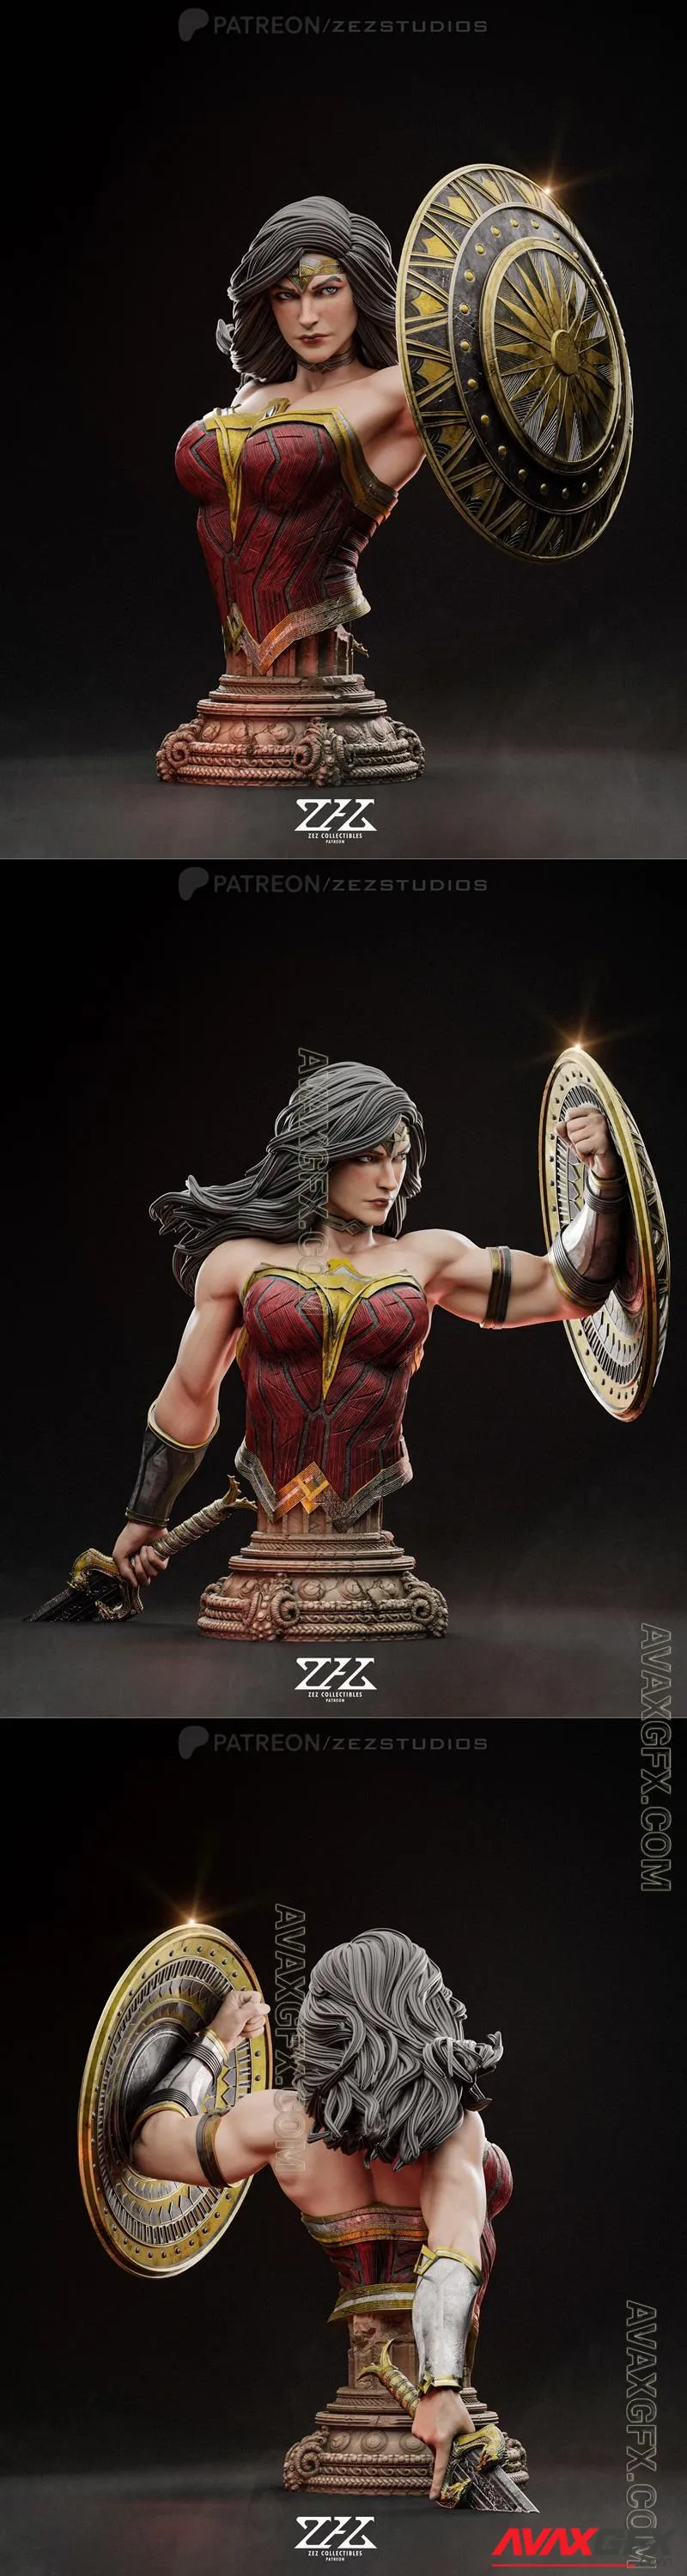 ZEZ Studios - Wonder Woman Bust - STL 3D Model